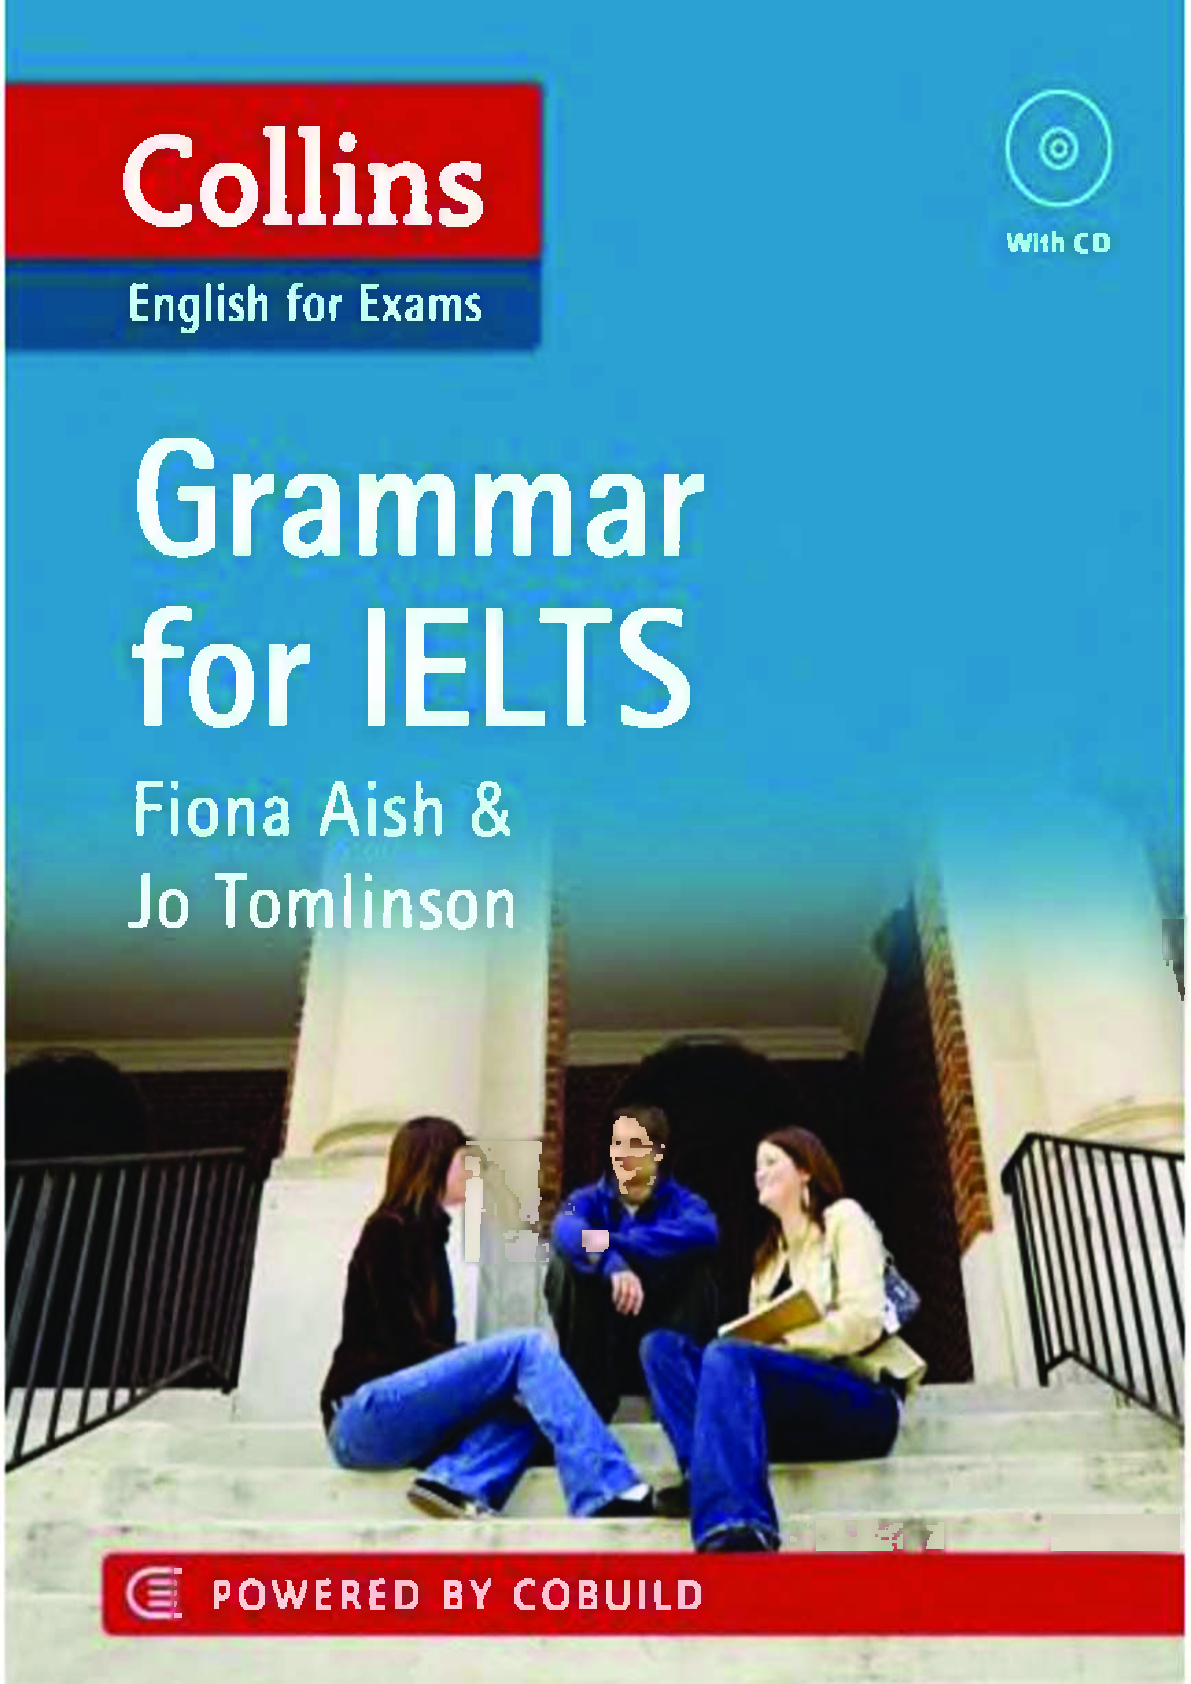 Sách Collins Grammar For IELTS pdf | Xem online, tải PDF miễn phí (trang 1)